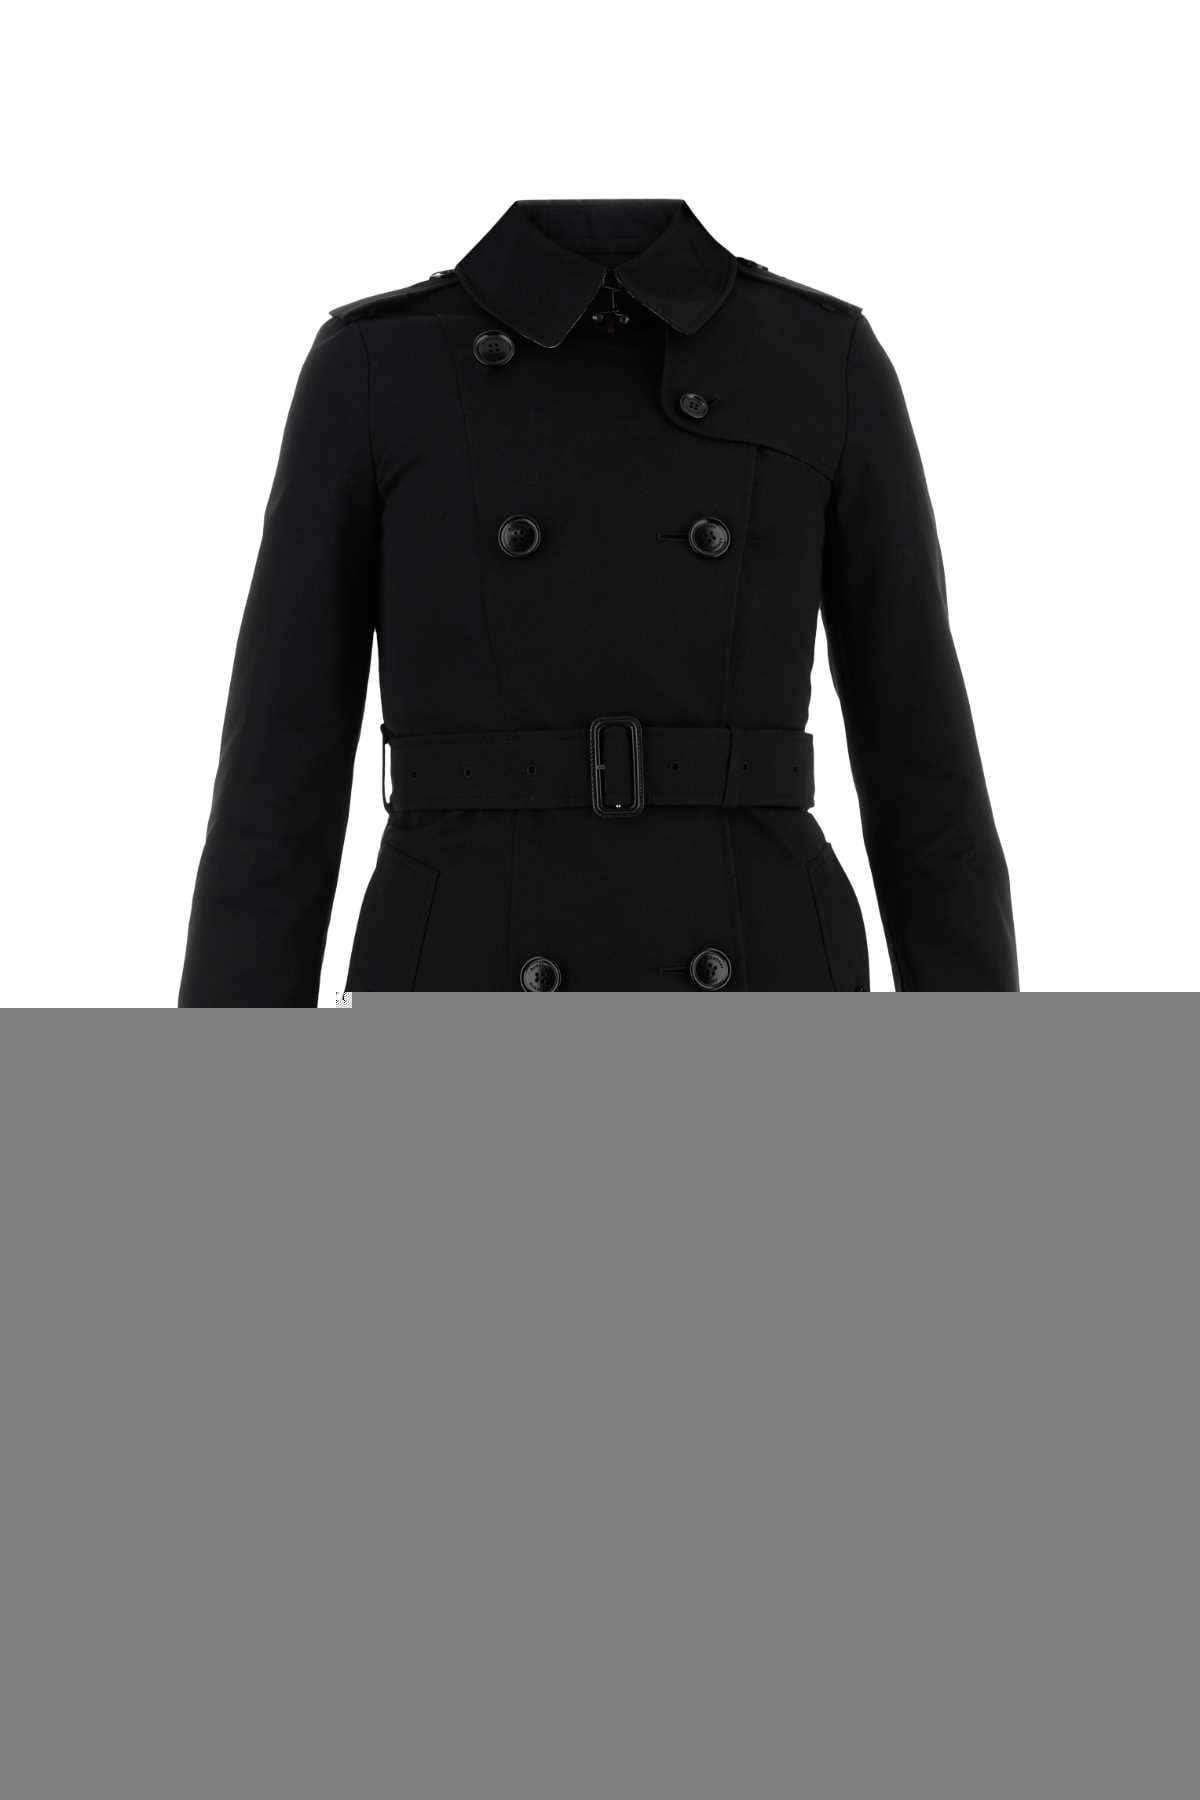 Shop Burberry Black Cotton Trench Coat